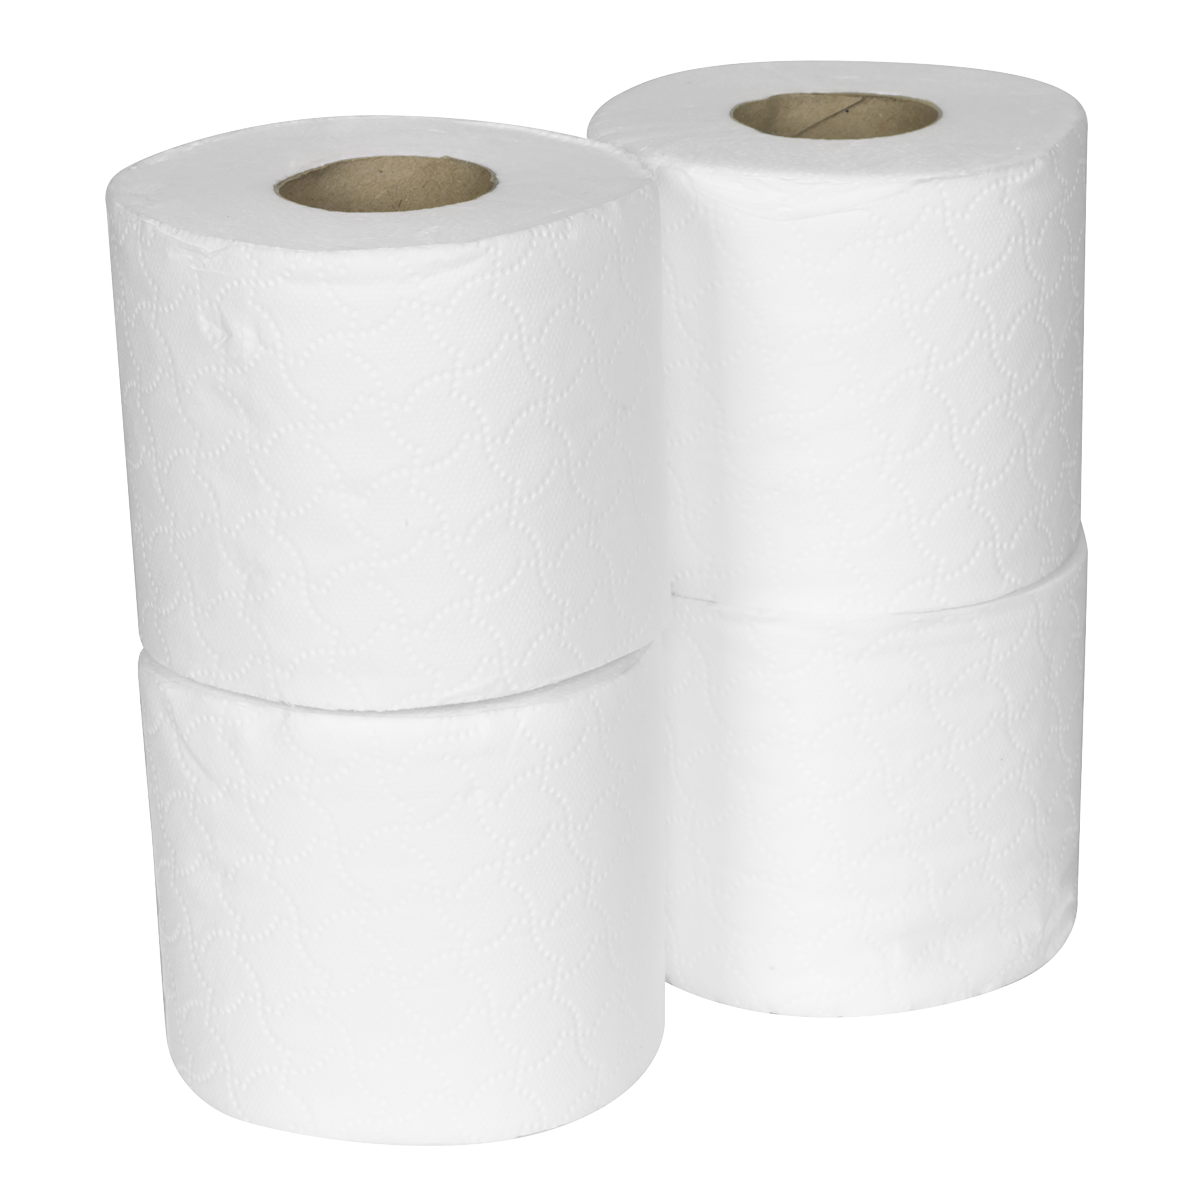 Plain White Toilet Roll - Pack of 4 x 10 (40 Rolls) - TOL40 - Farming Parts